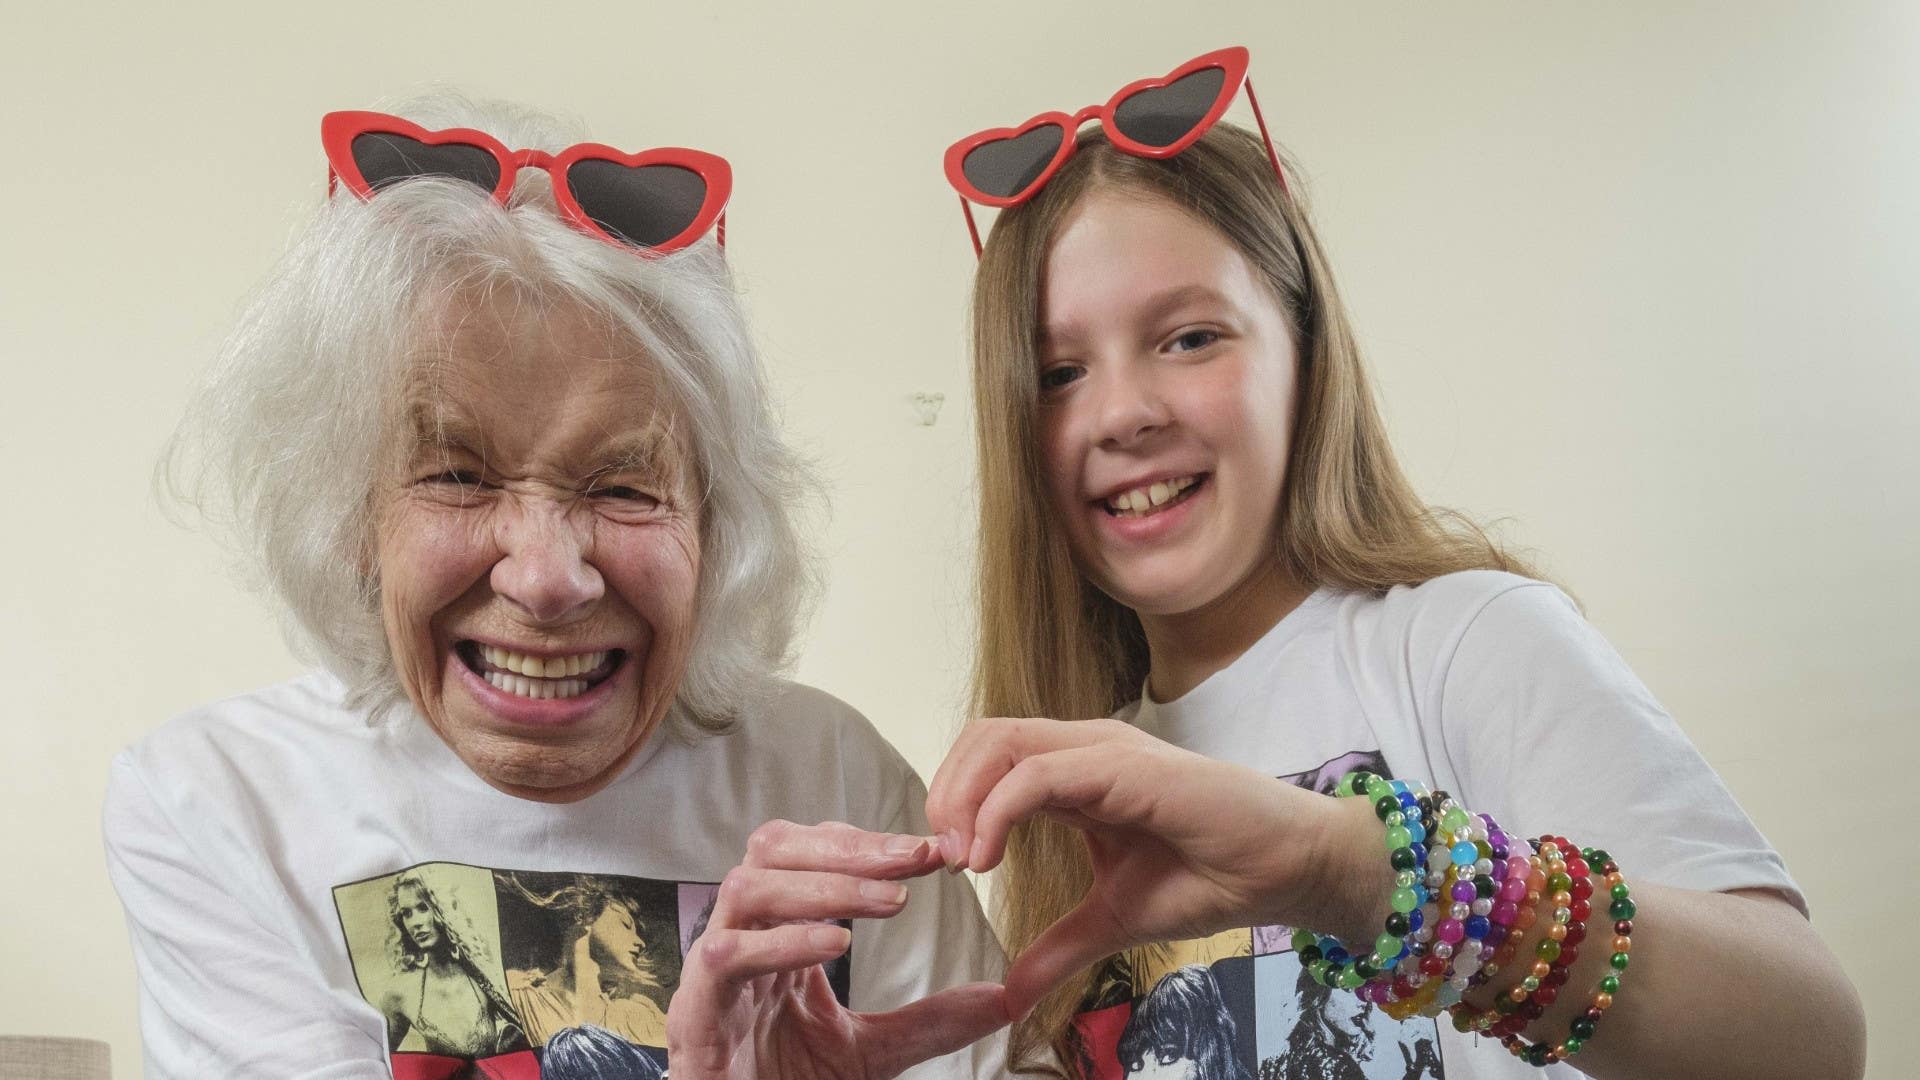 Taylor Swift fan, 11, makes hundreds of friendship bracelets for the elderly